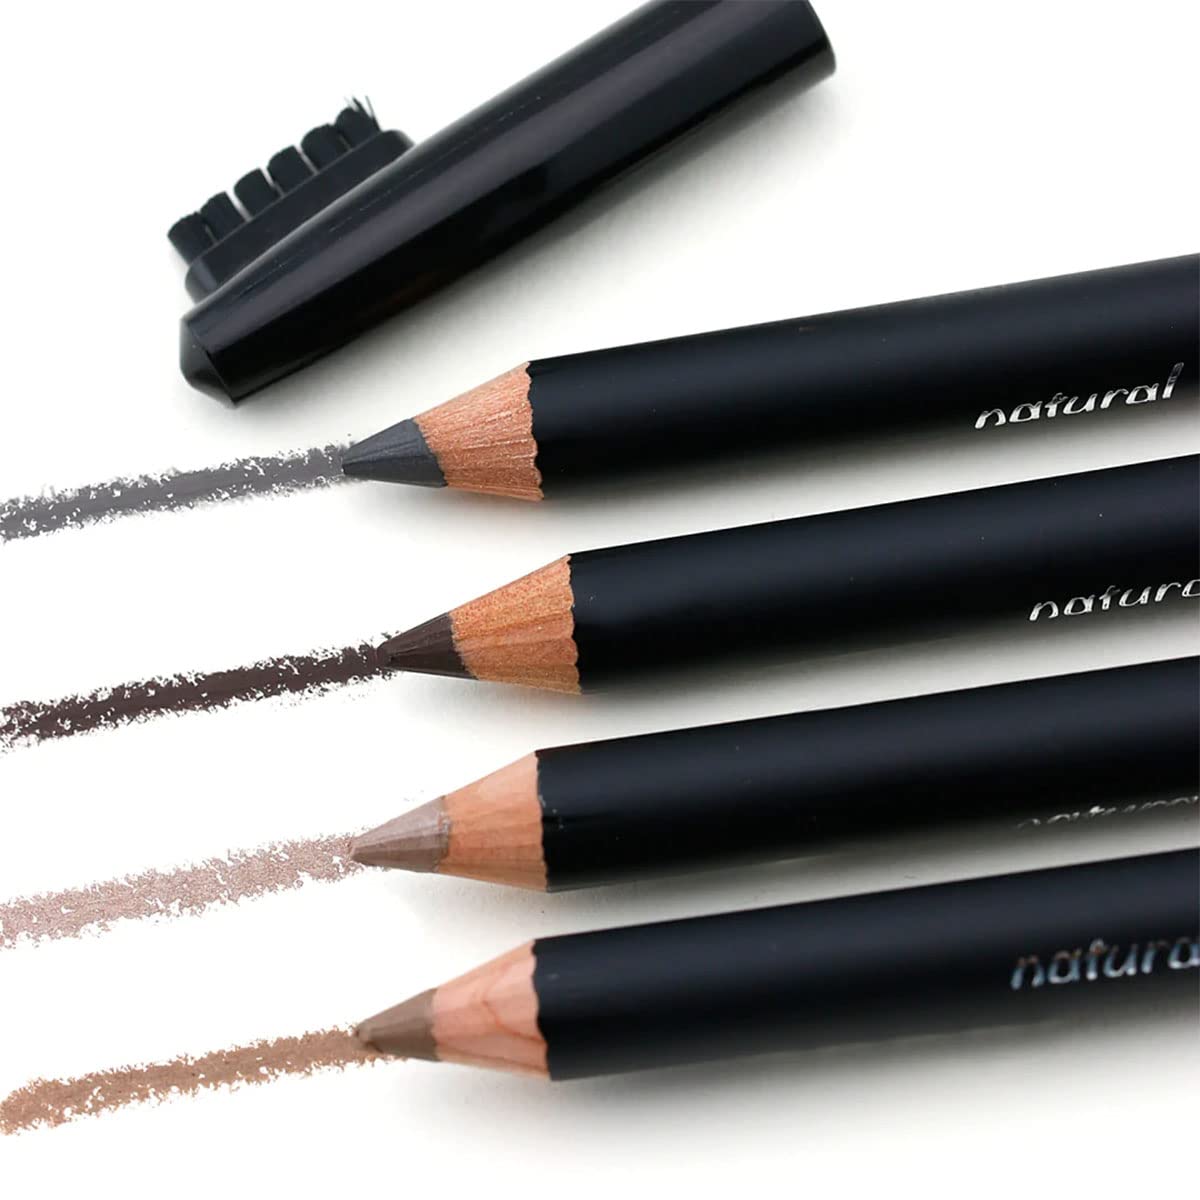 Sorme Cosmetics Waterproof Natural Defining Eyebrow Pencil